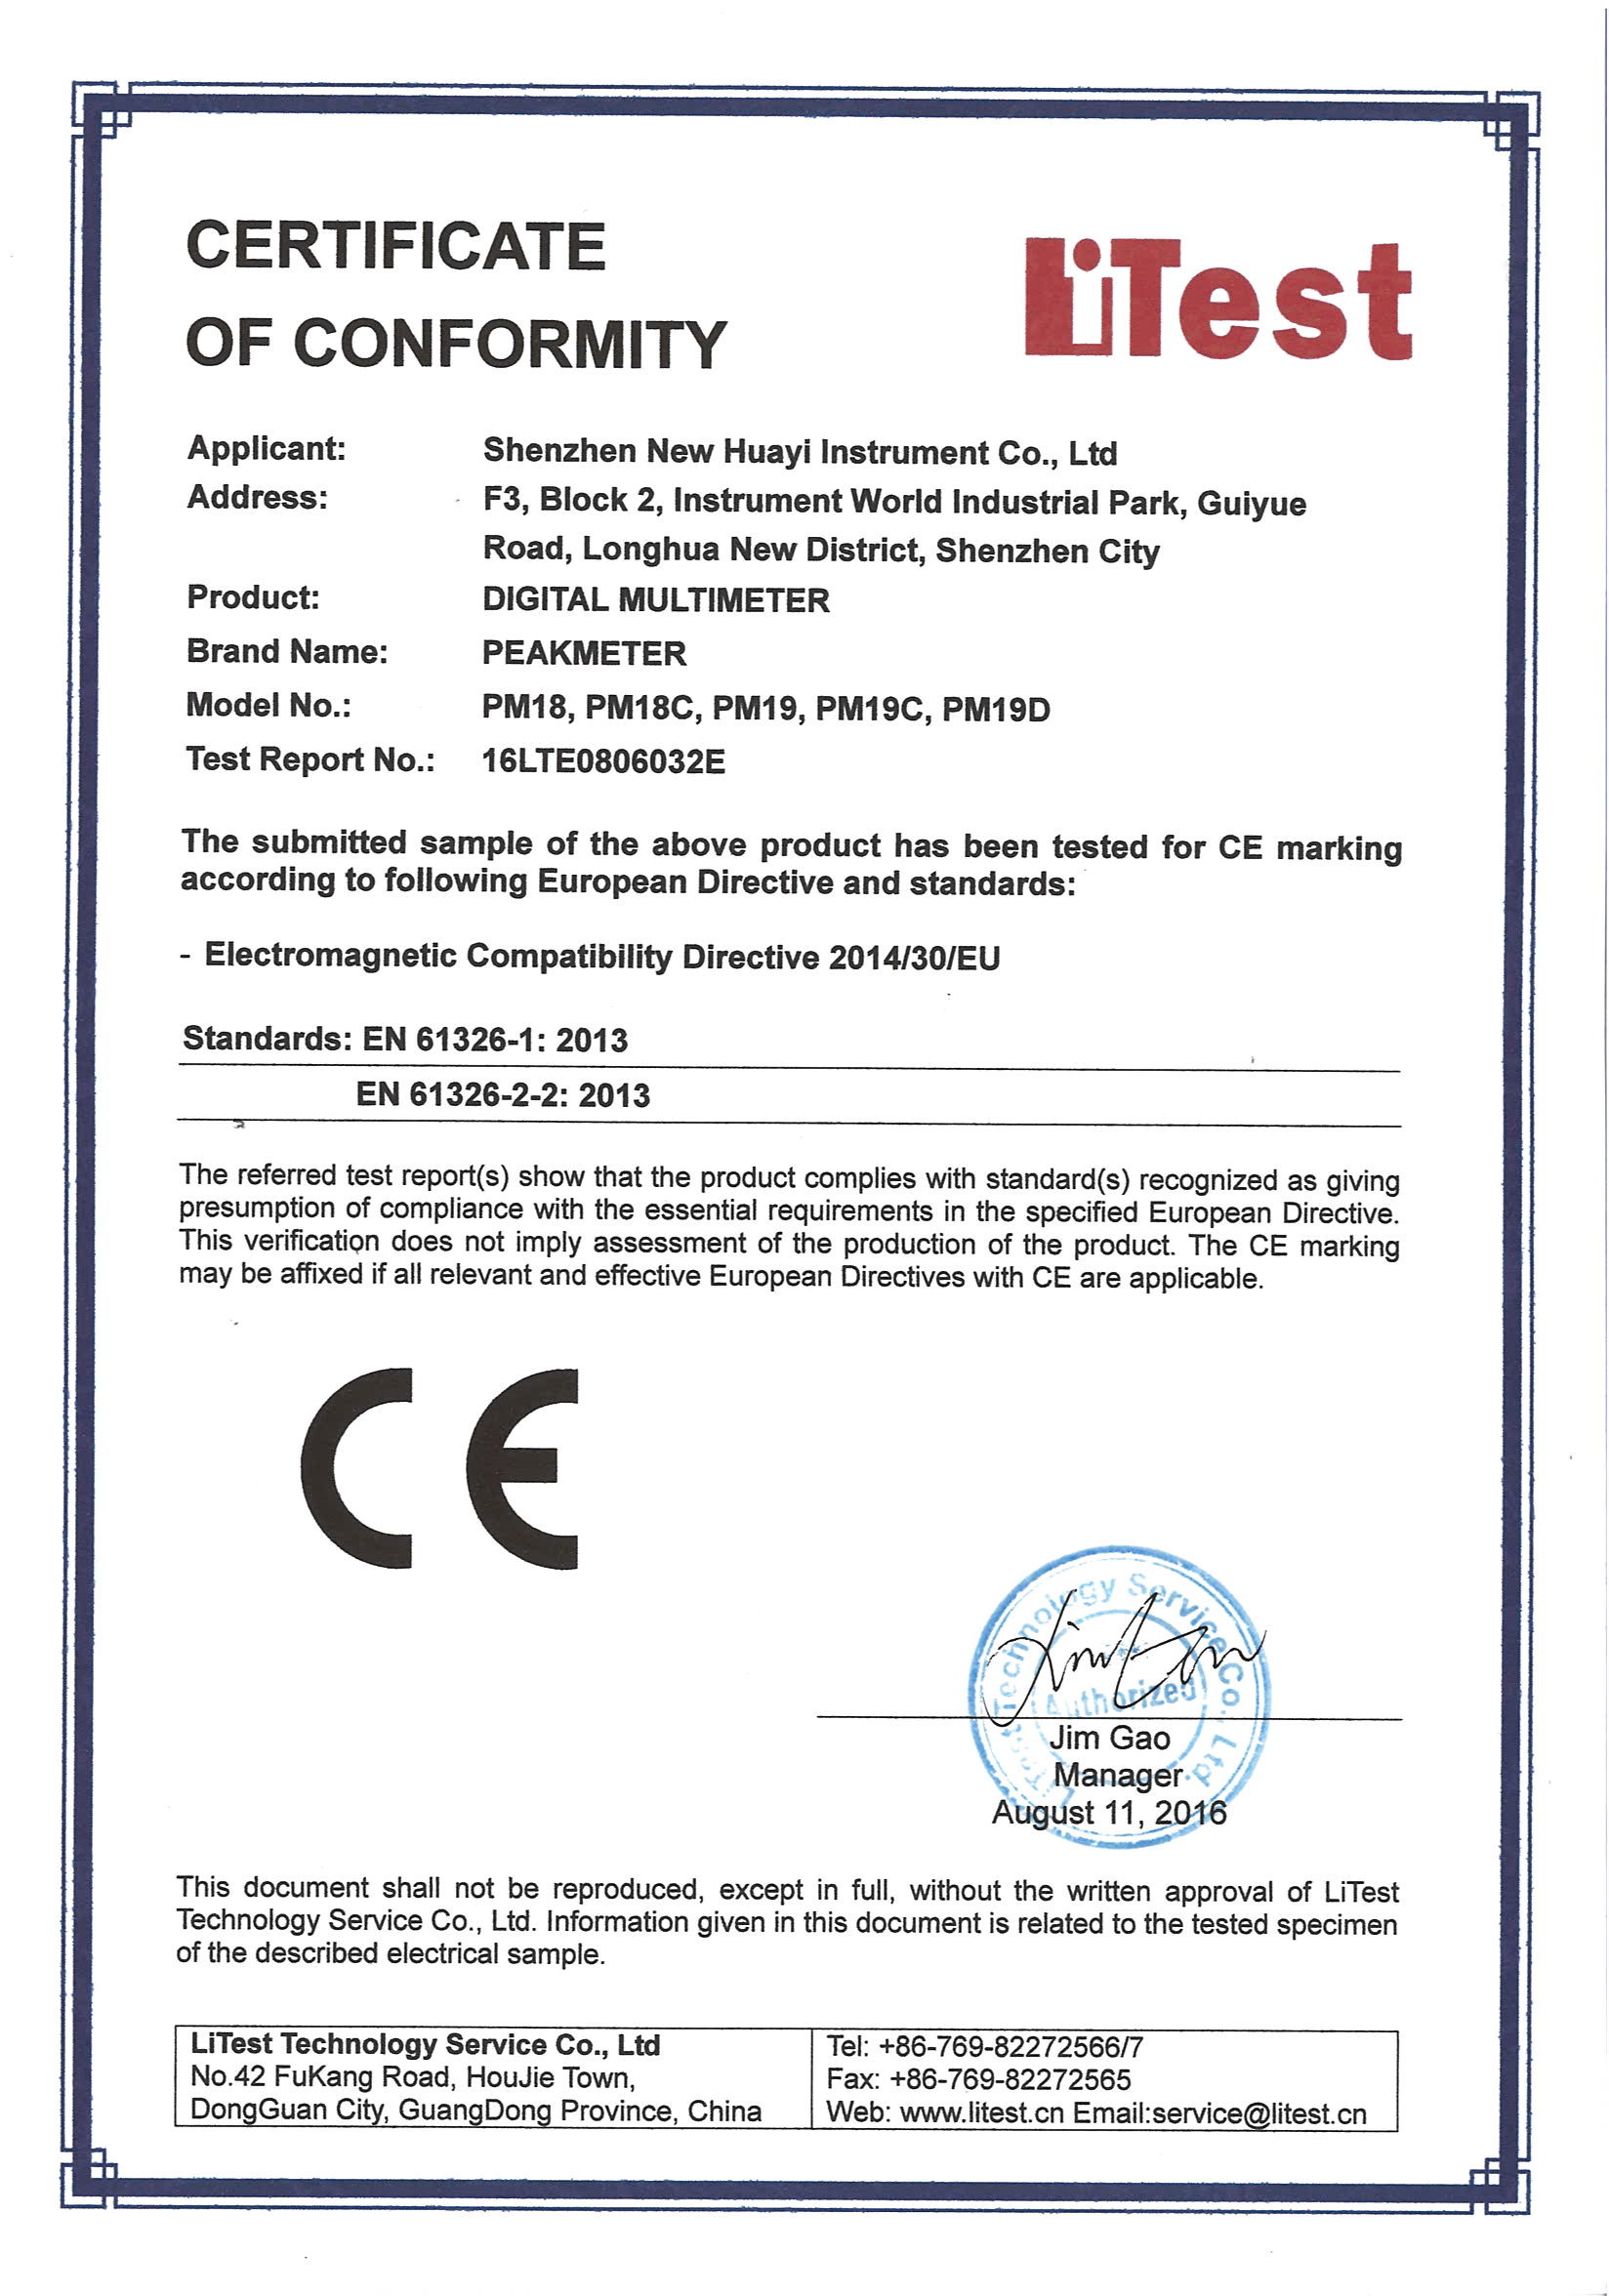 Shenzhen Huayi Peakmeter Technology Co., Ltd. Certifications